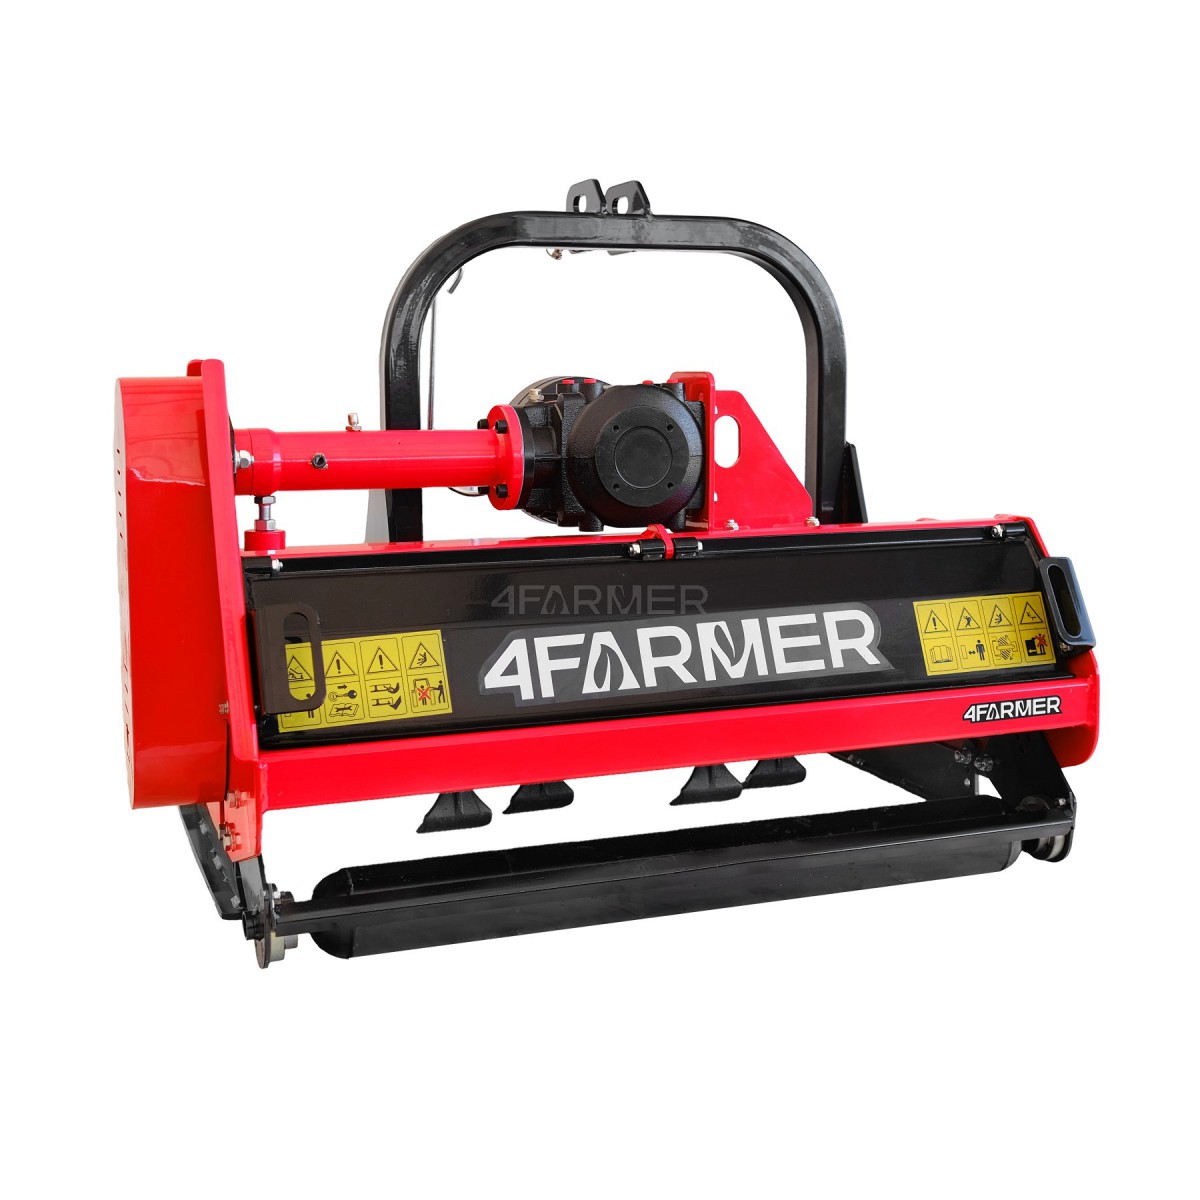 EFGC 125D 4FARMER flail mower - red